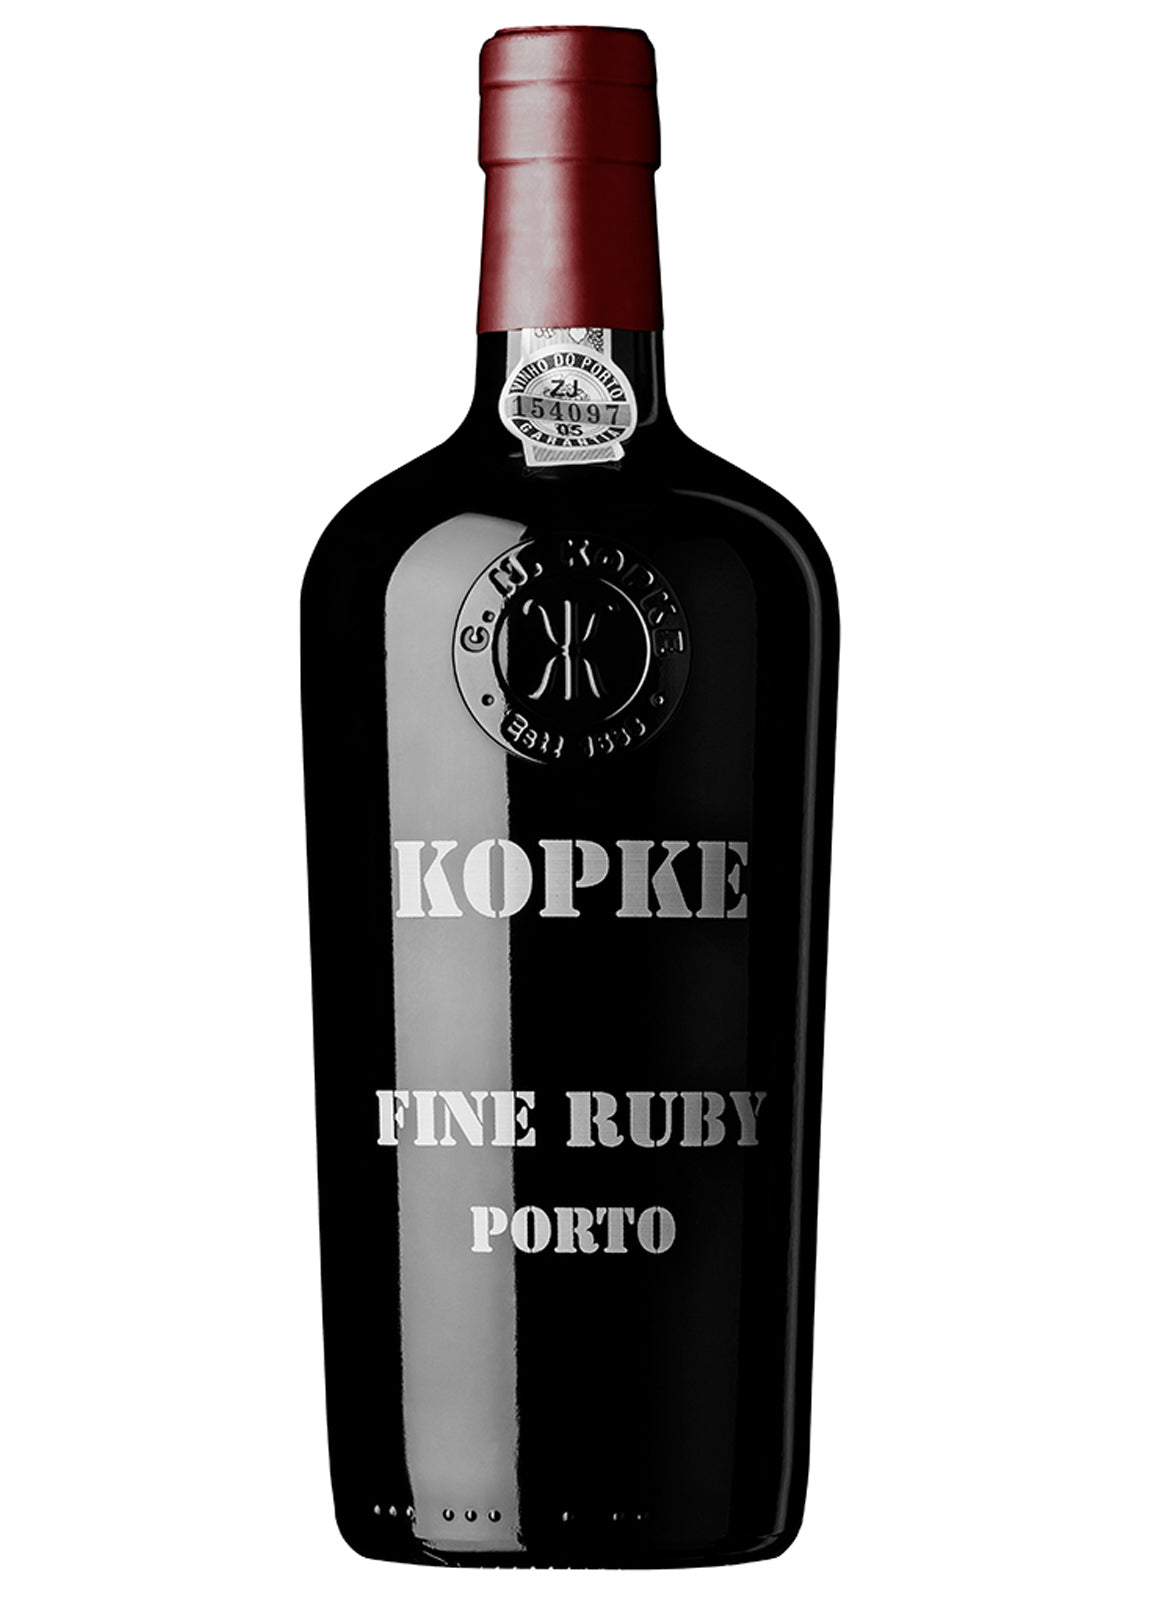 Vinho do Porto Fine Ruby Kopke